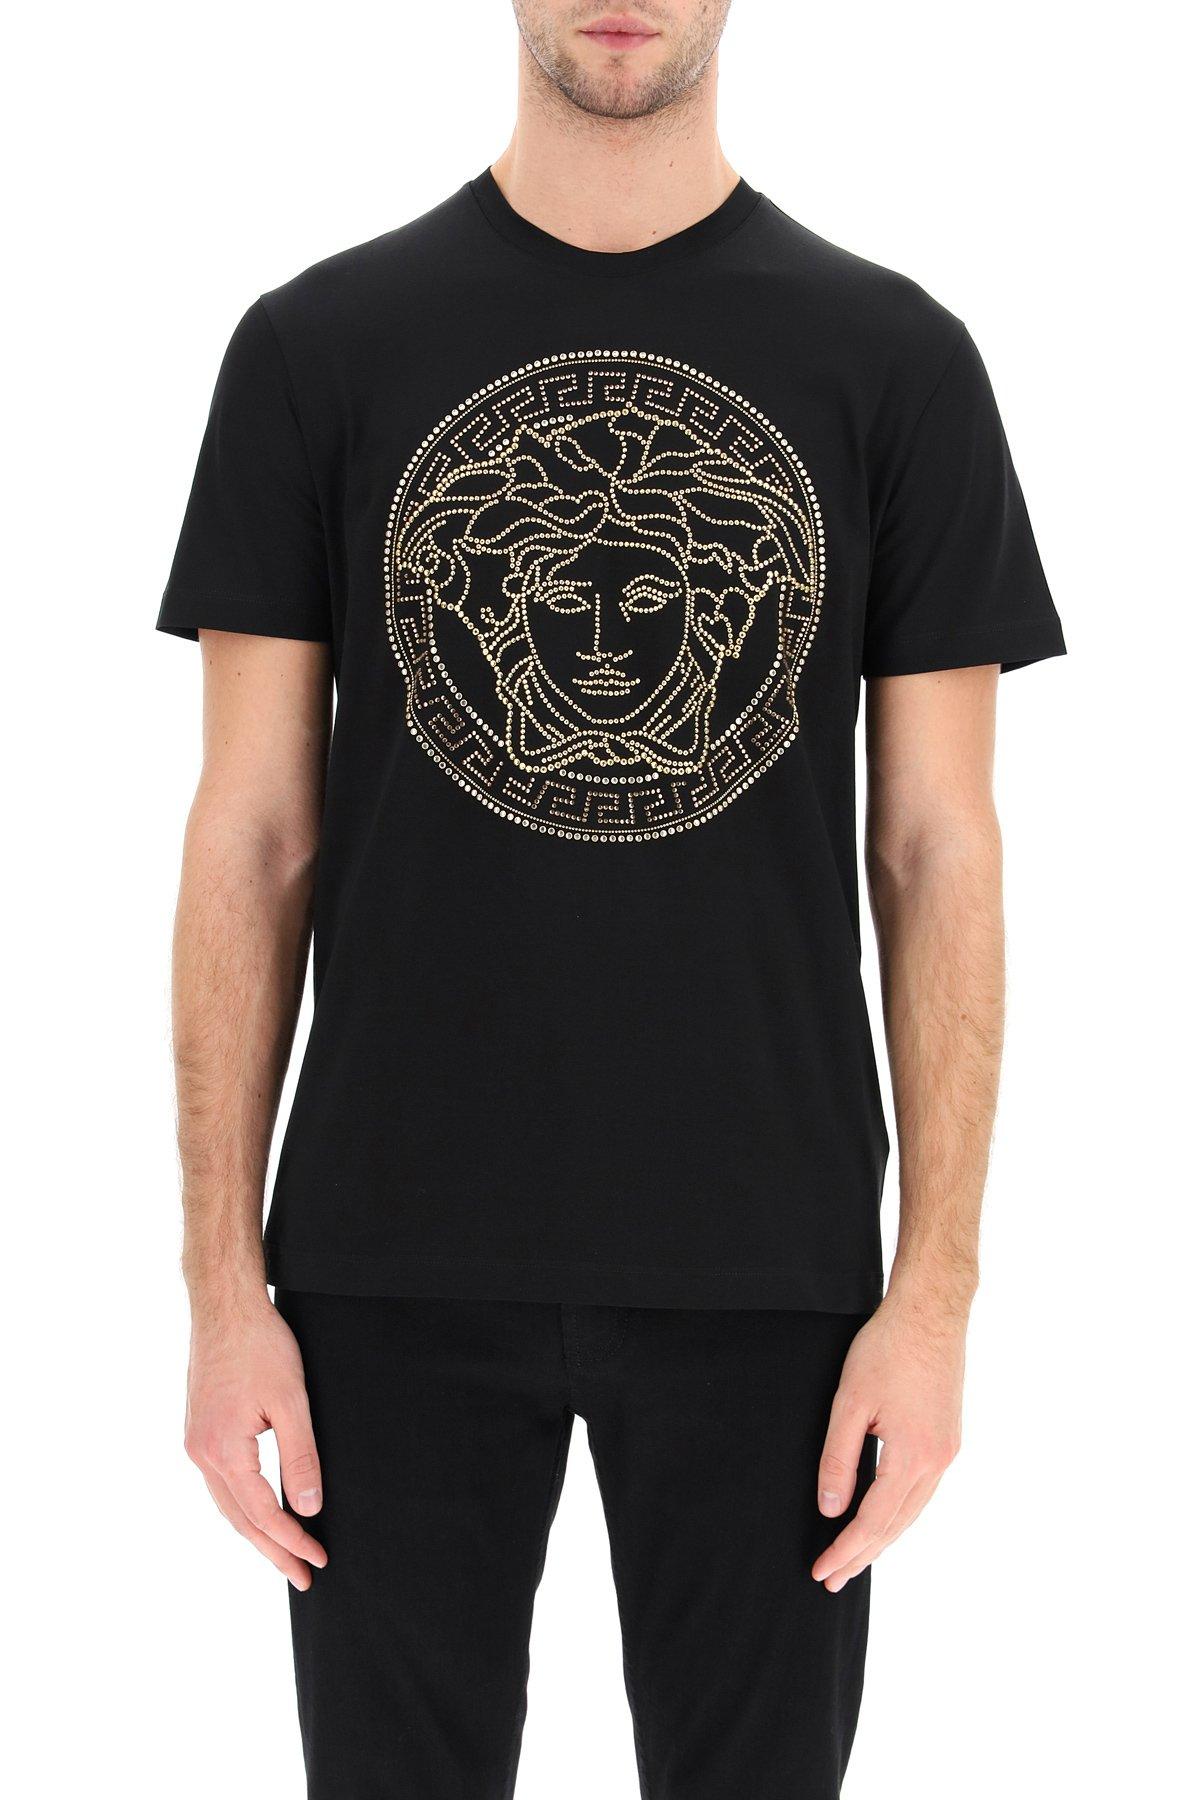 Versace Cotton Medusa T-shirt in Nero (Black) for Men - Save 60% | Lyst